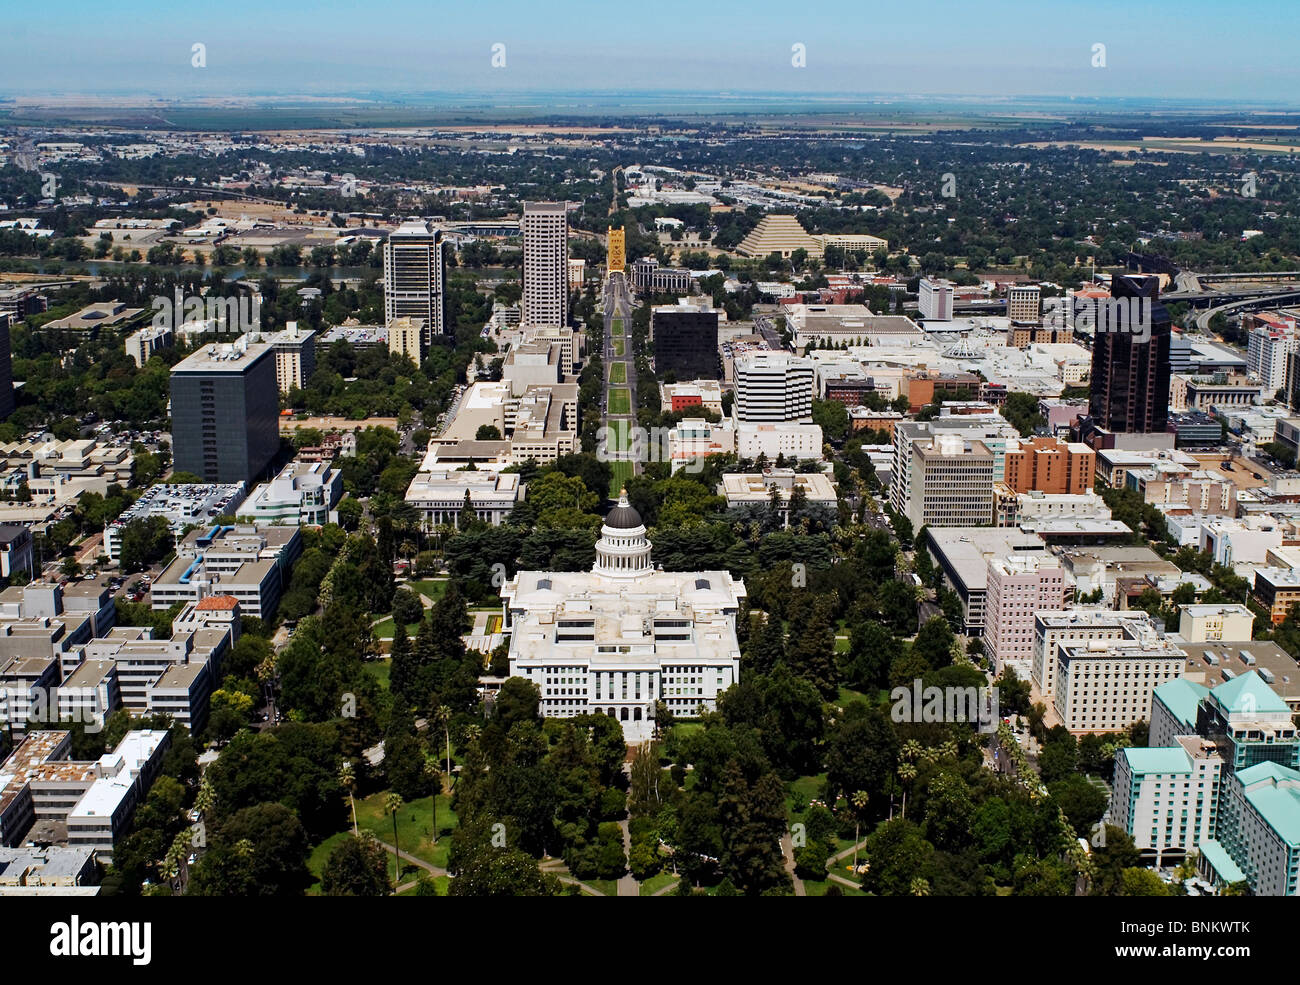 aerial-view-above-california-state-capitol-building-sacramento-BNKWTK.jpg